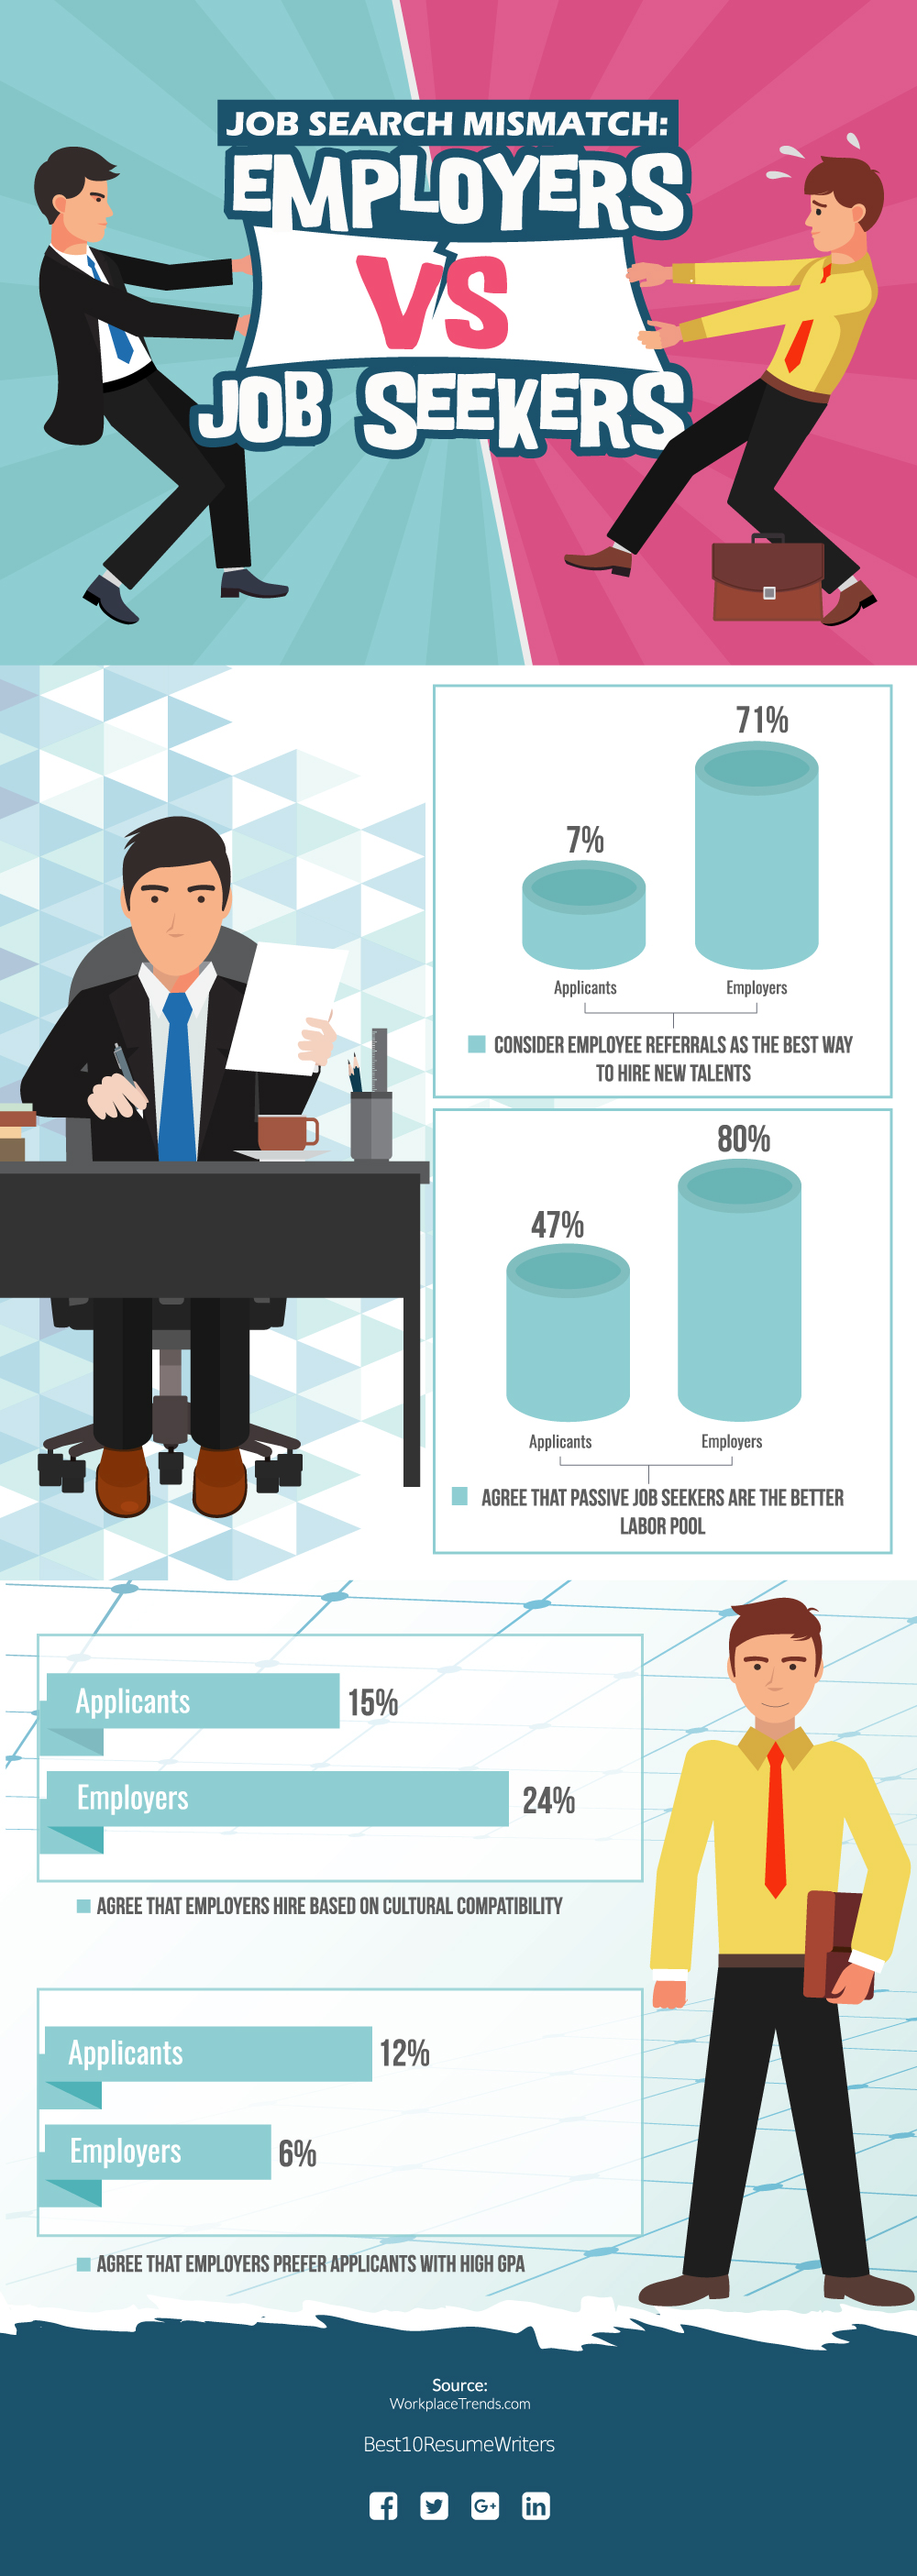 Job Search Mismatch - Employers vs Job Seekers - B10R - Infographic